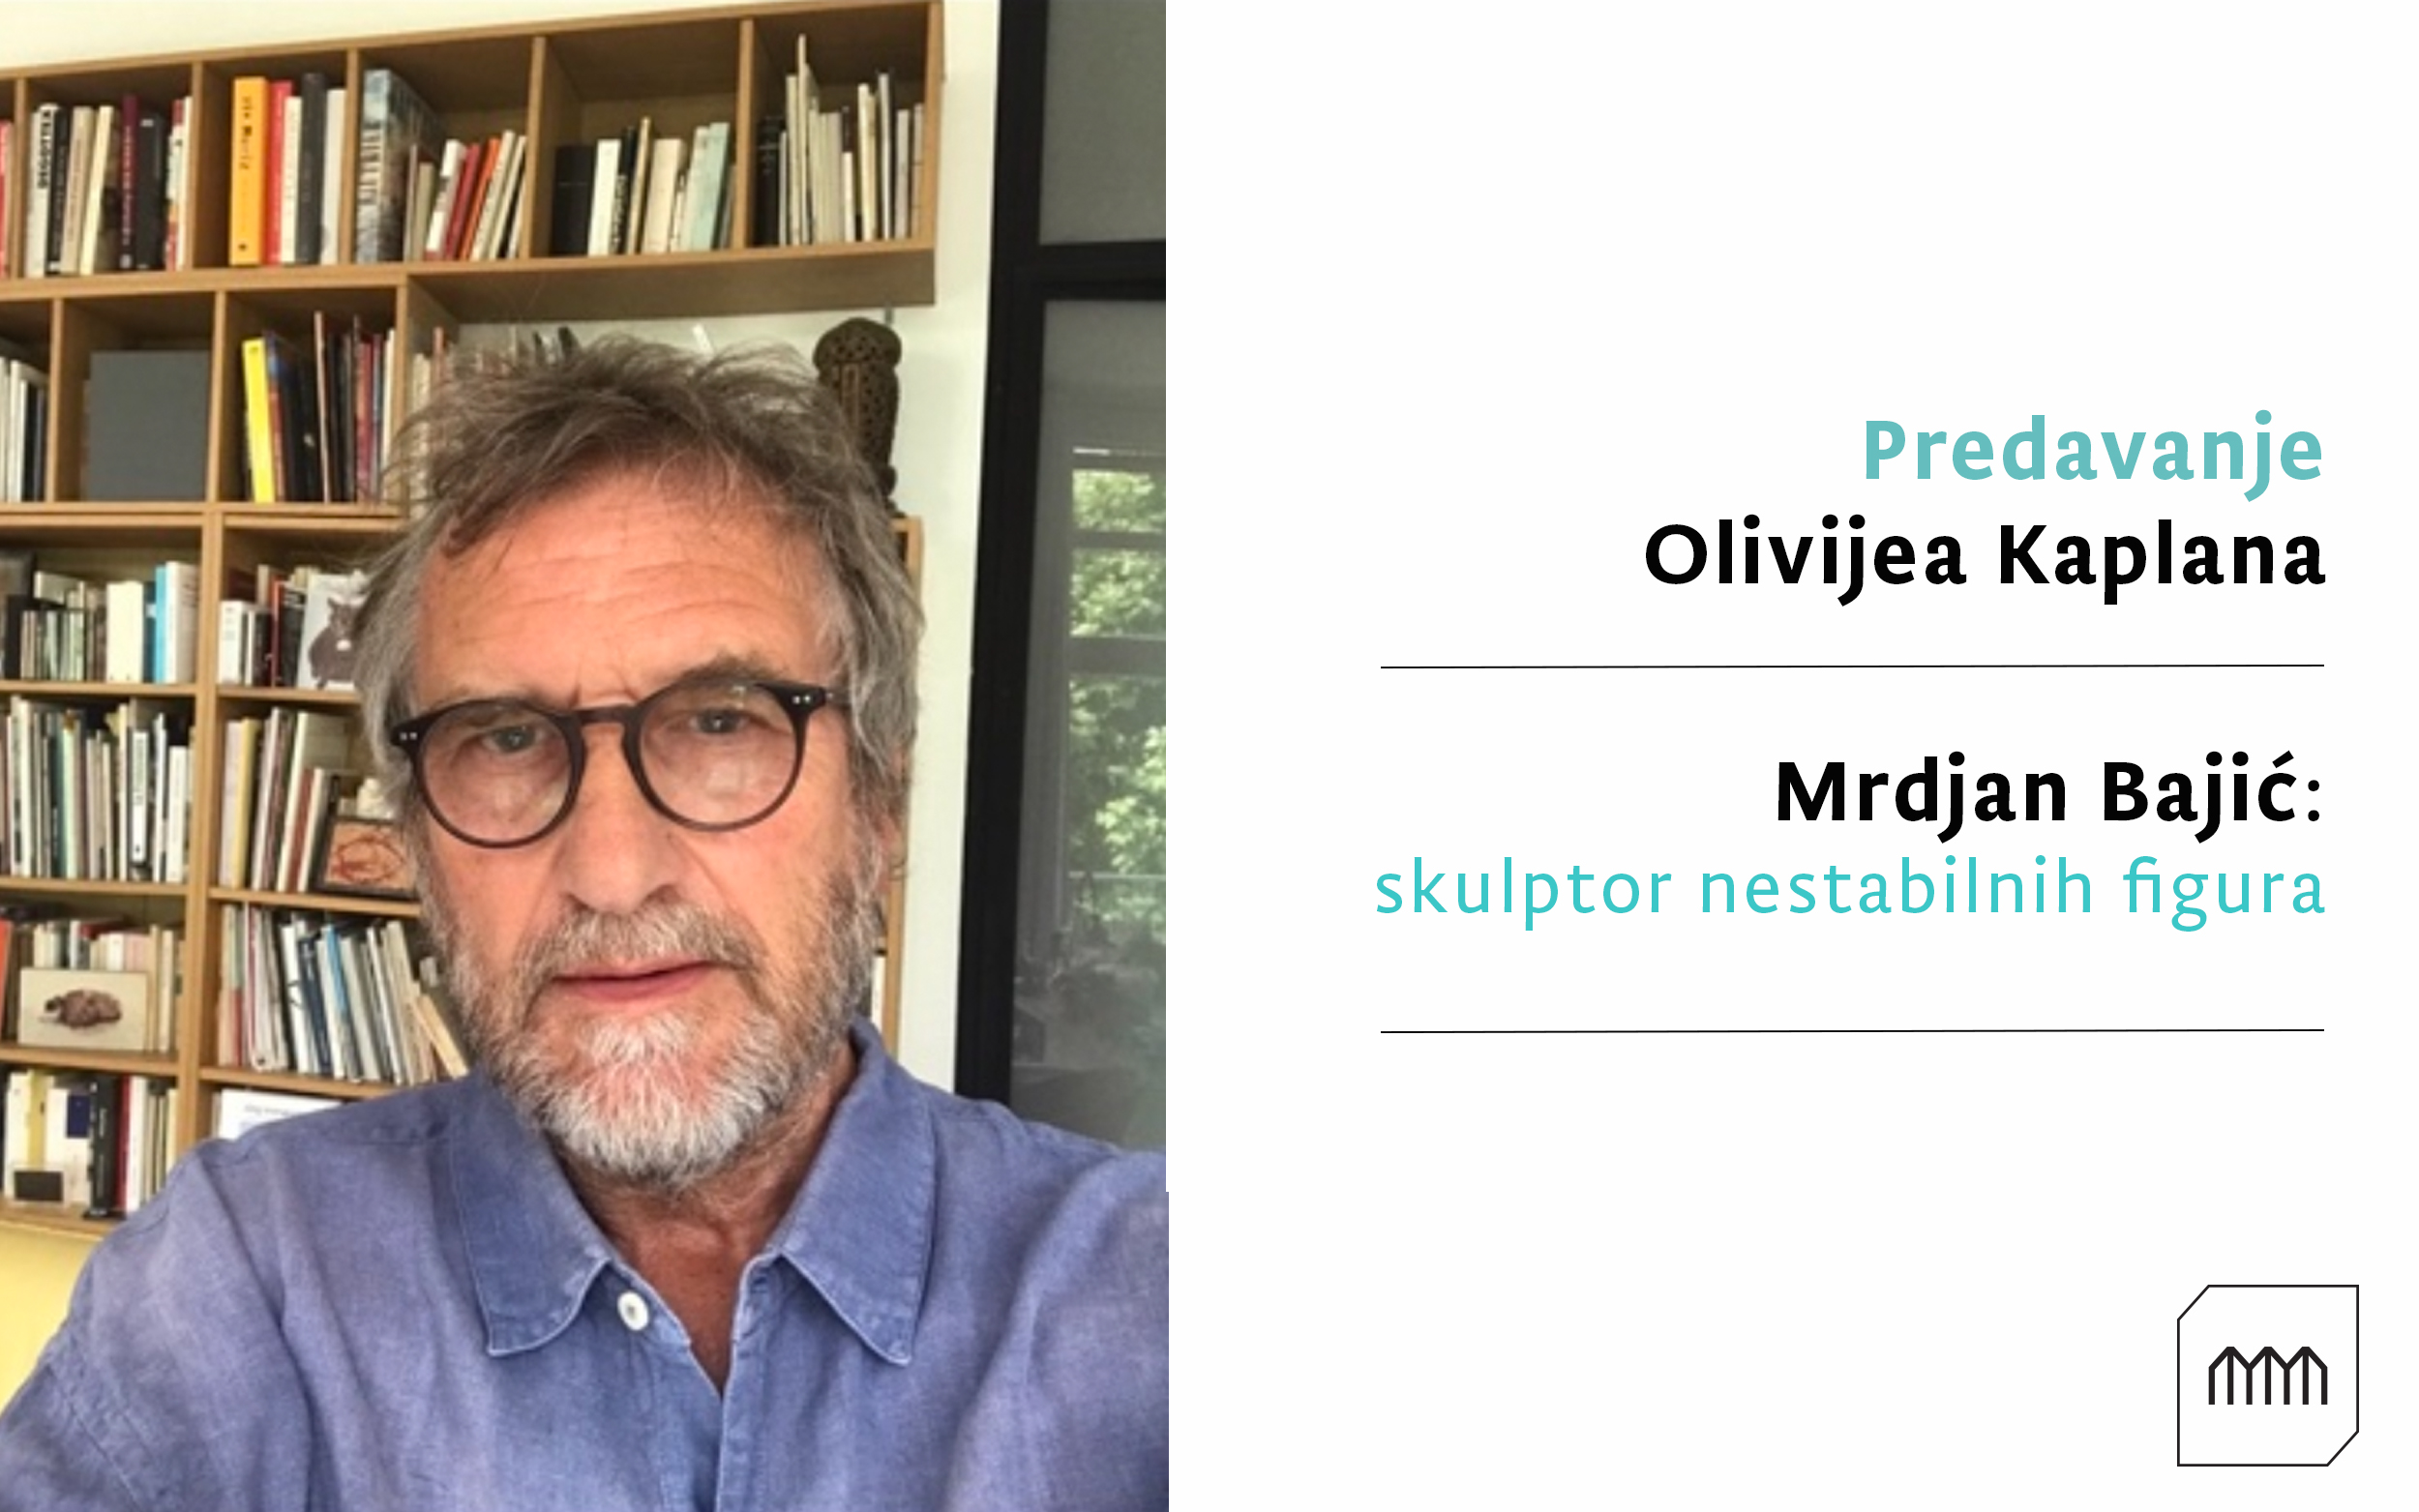 Predavanje Olivijea Kaplana:Mrdjan Bajic, skulptor nestabilnih figura